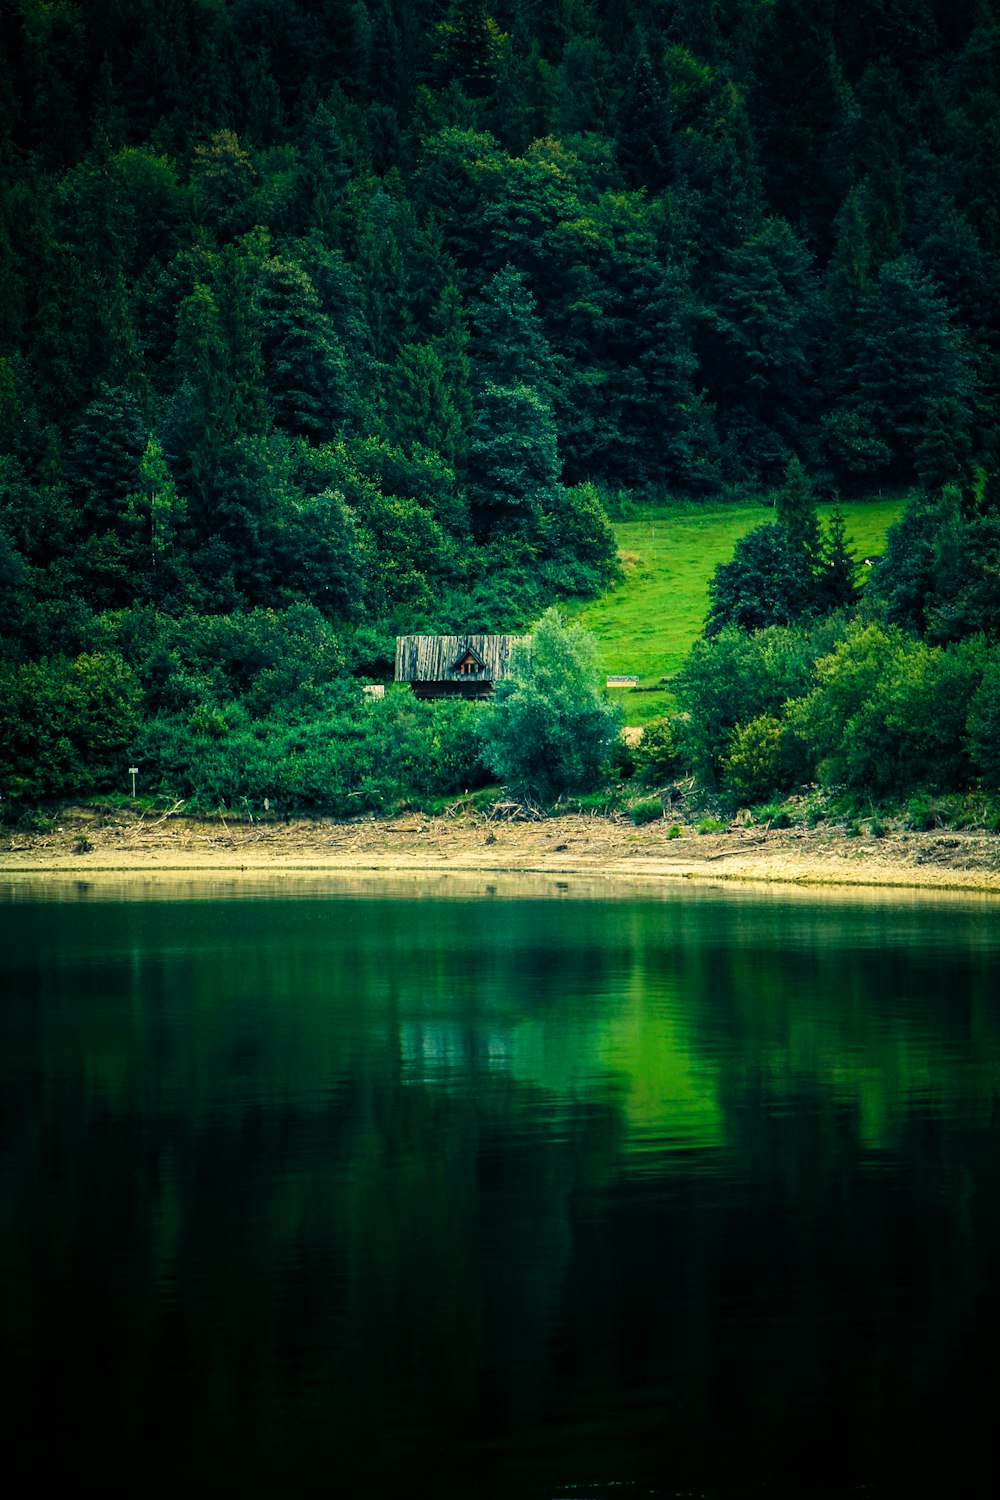 gray house on grass field near body of water